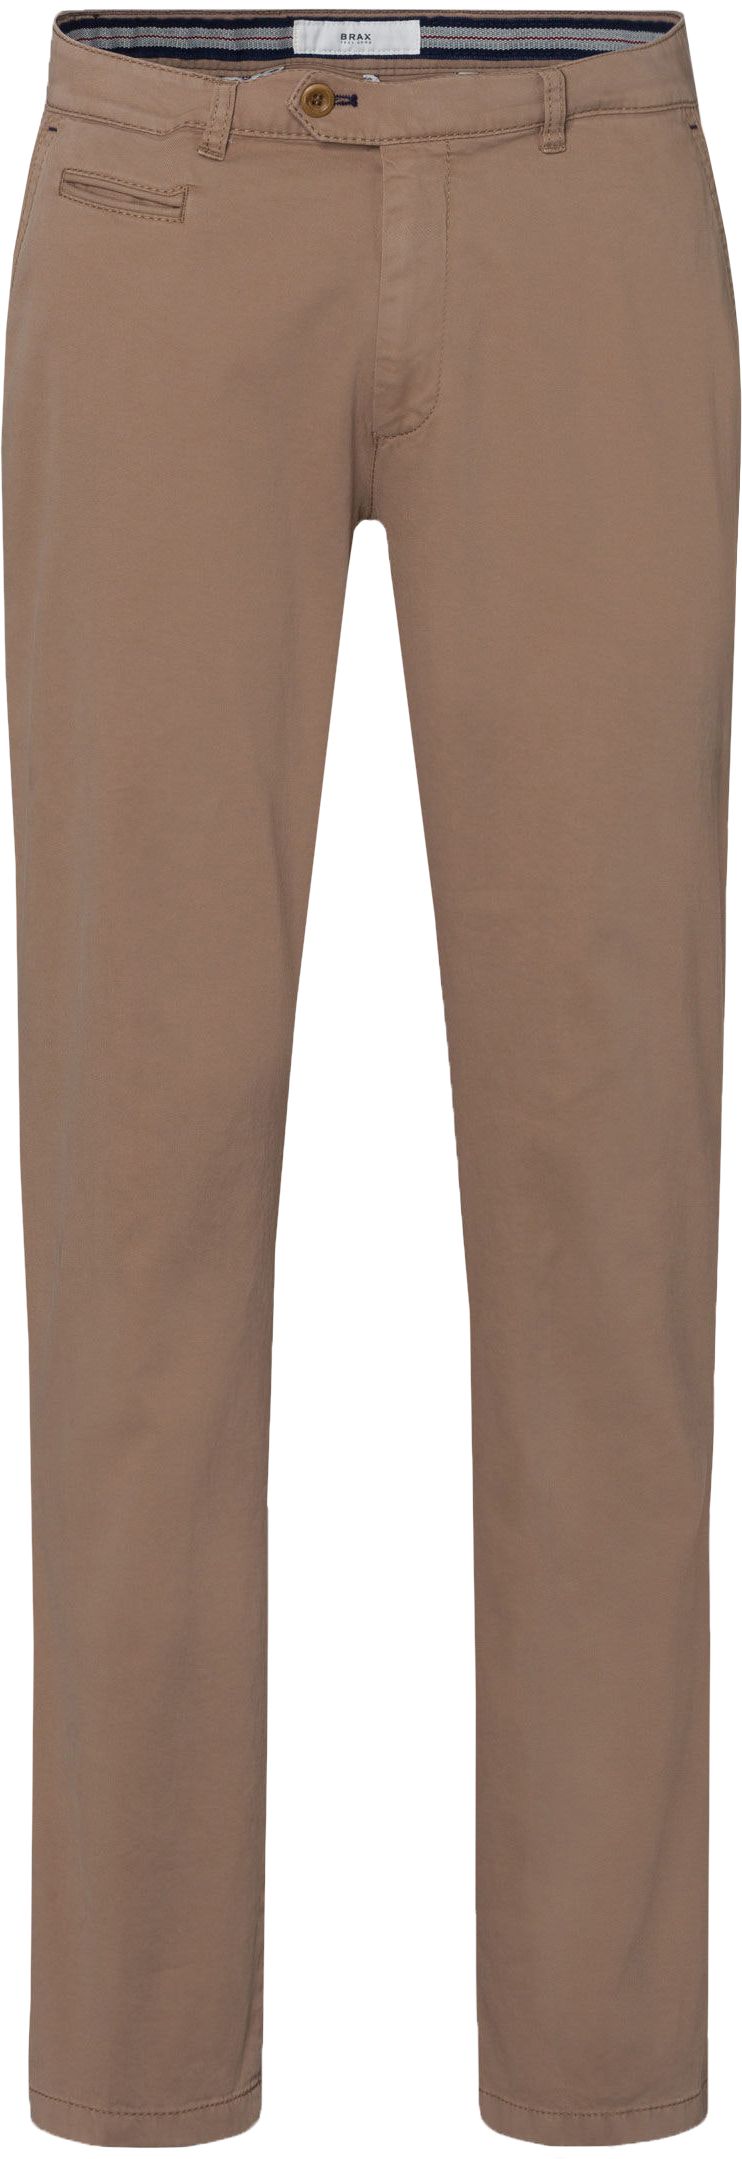 Brax Everest Pants Five Pocket Beige size 28